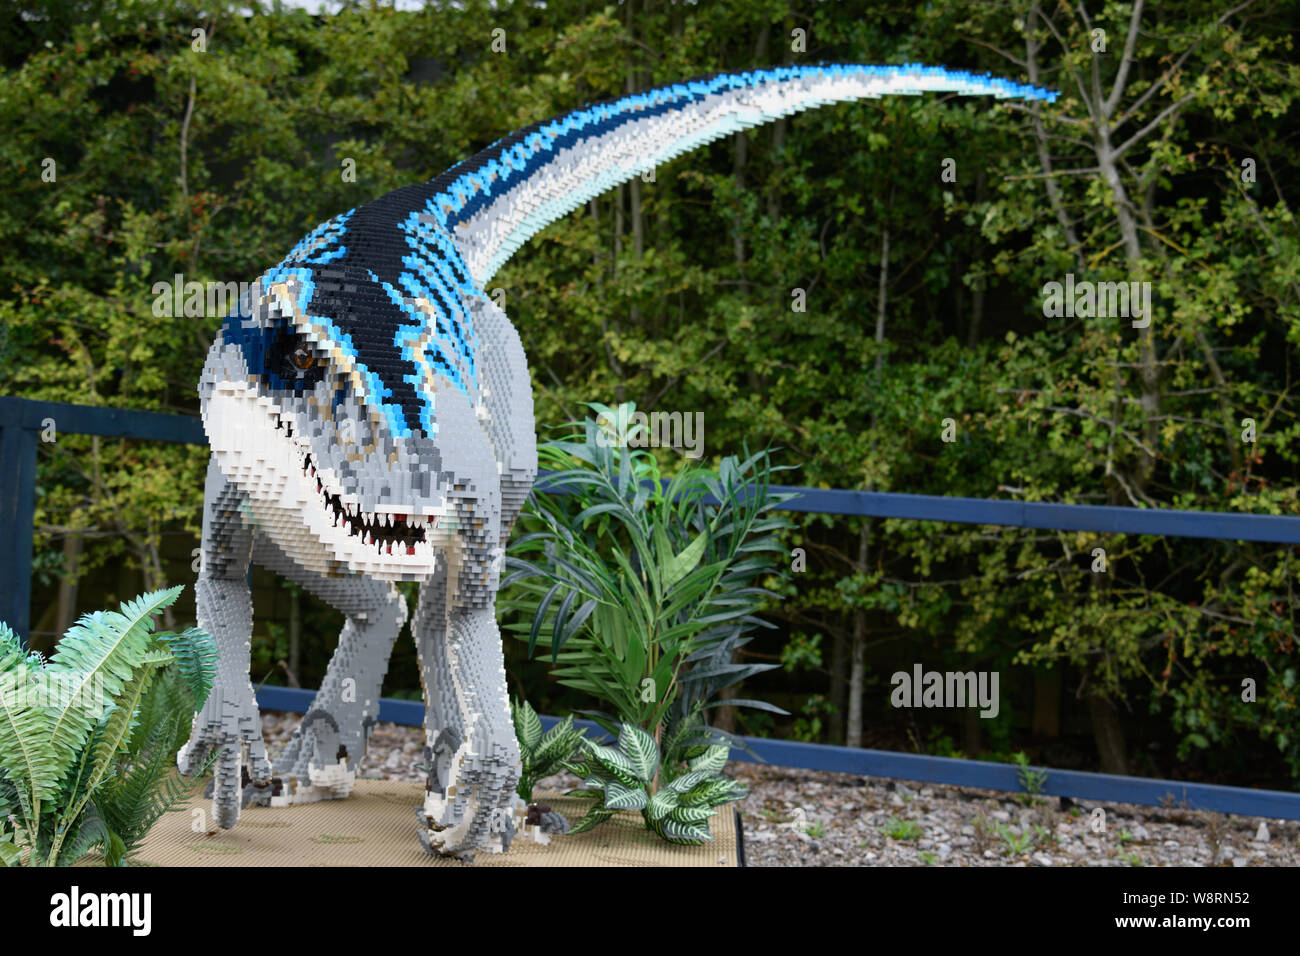 Lego dinosaur display Stock Photo - Alamy